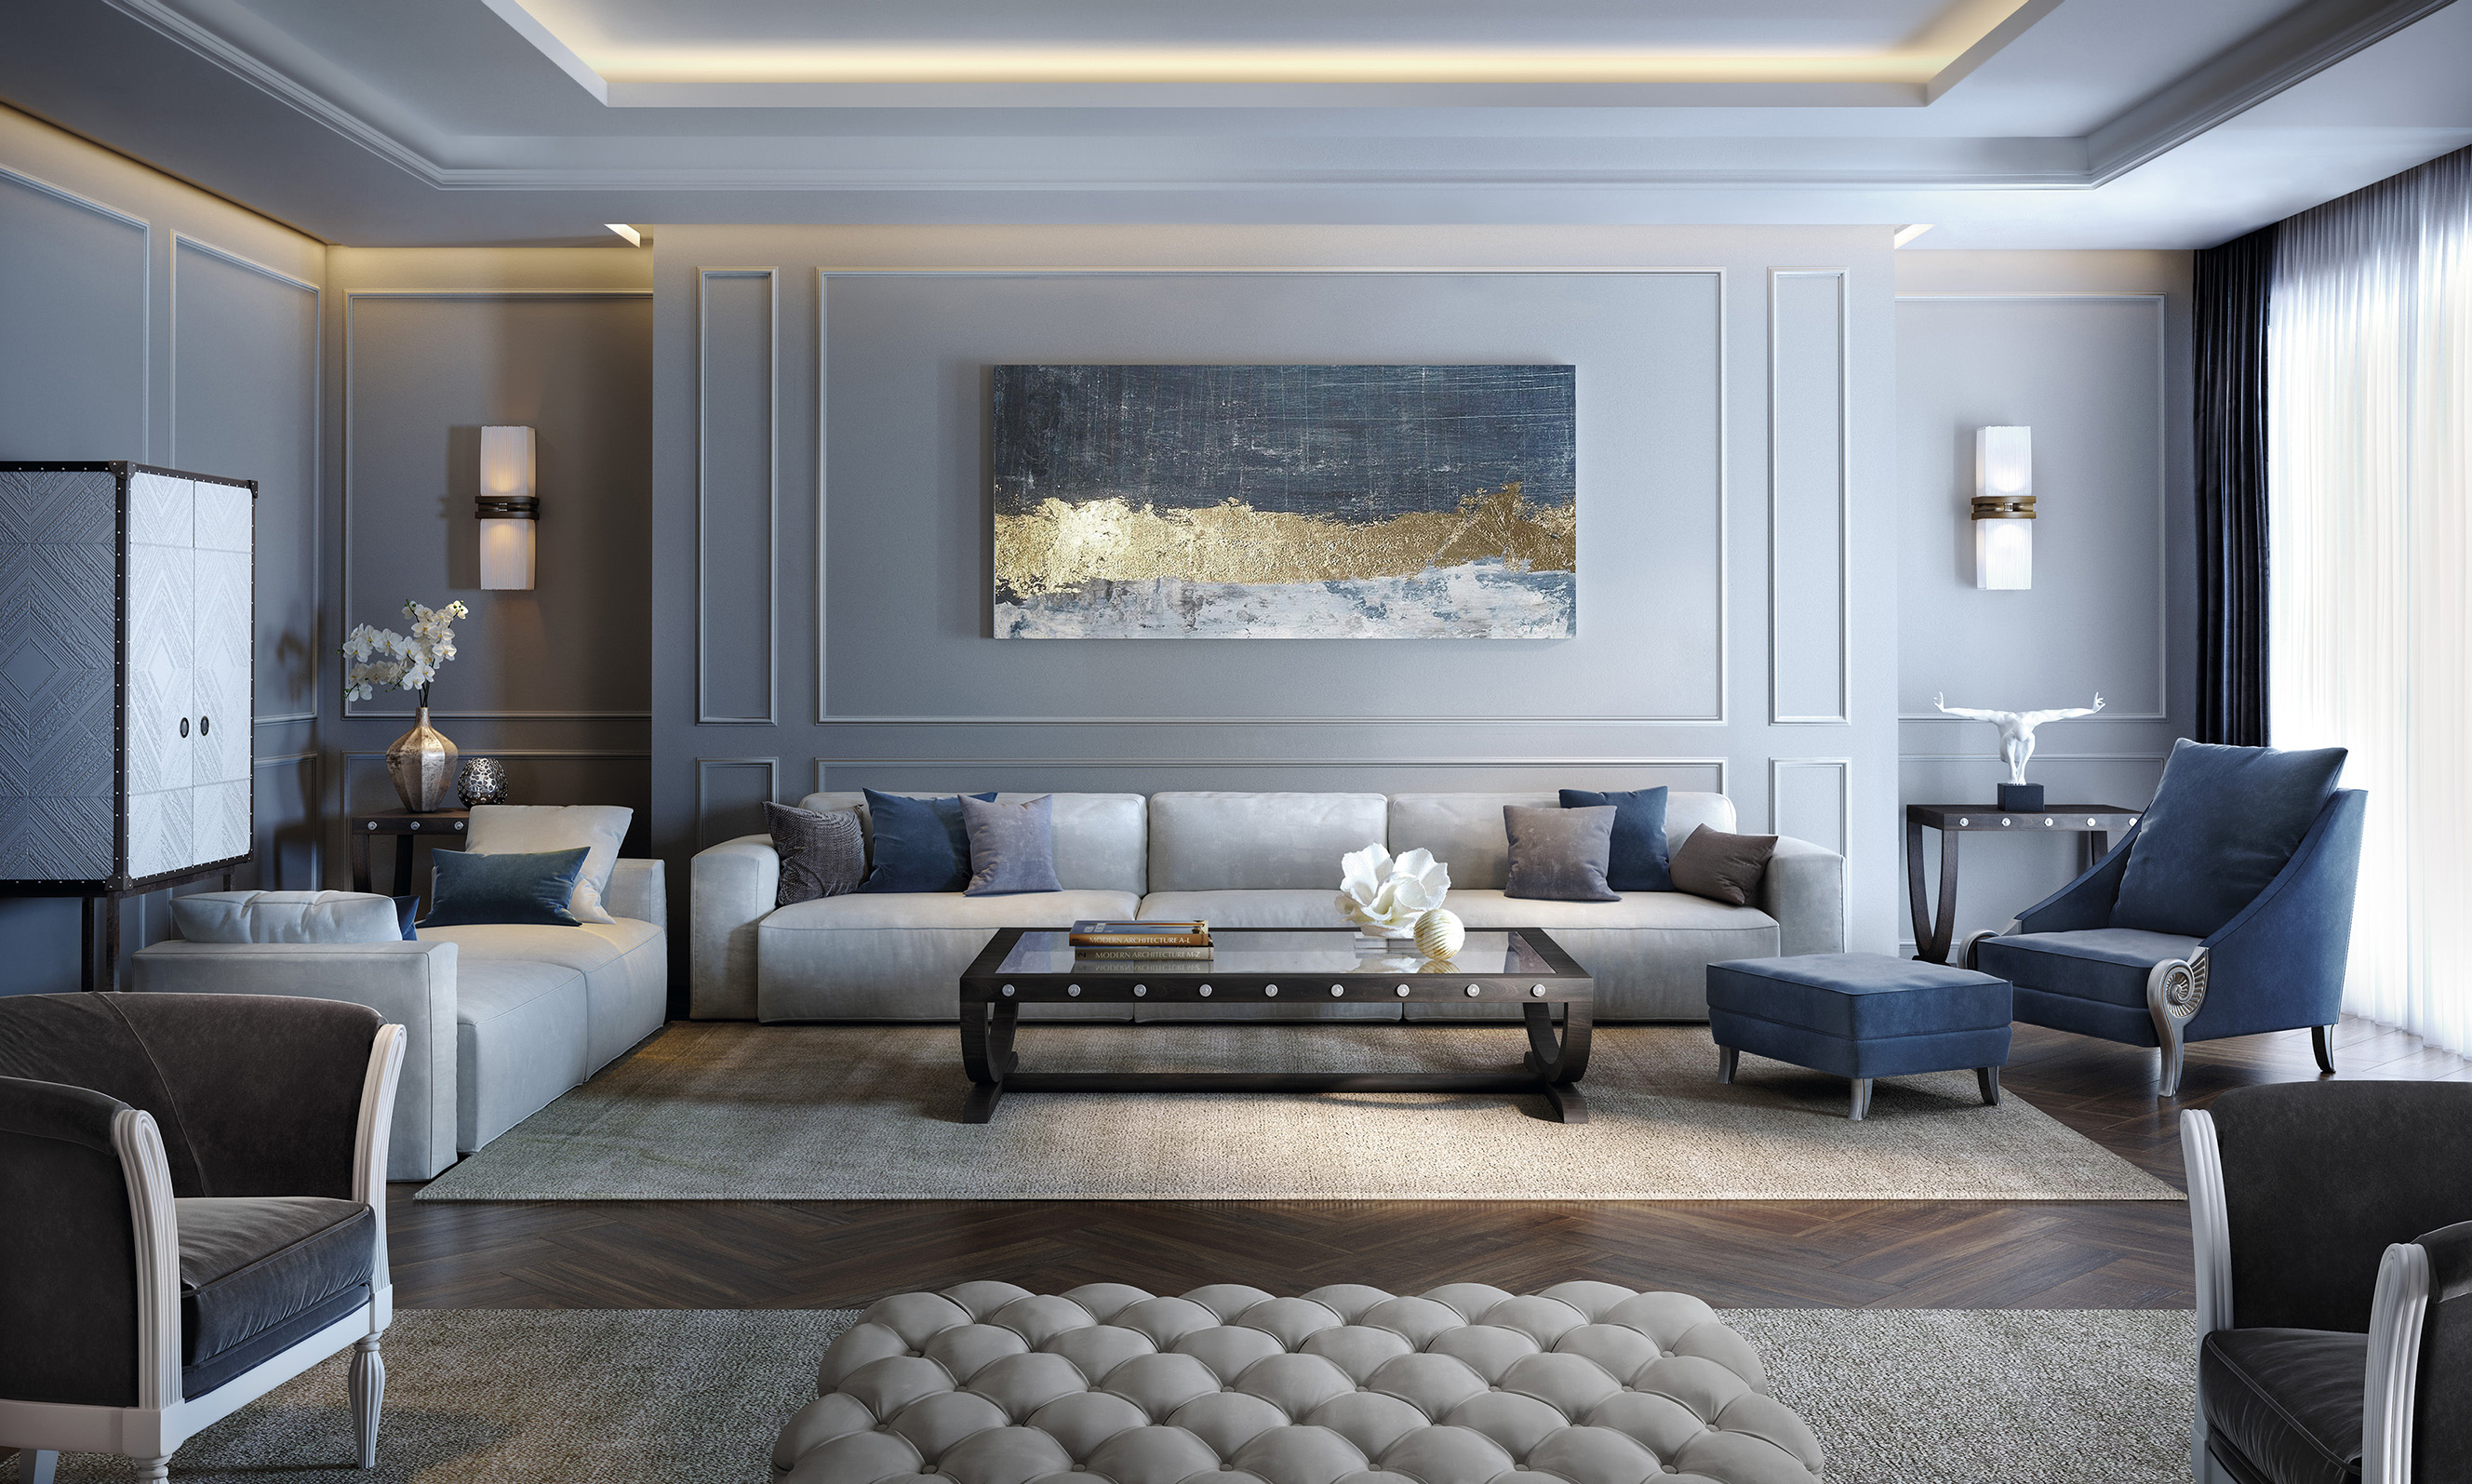 Luxury Living Room Furniture Sets